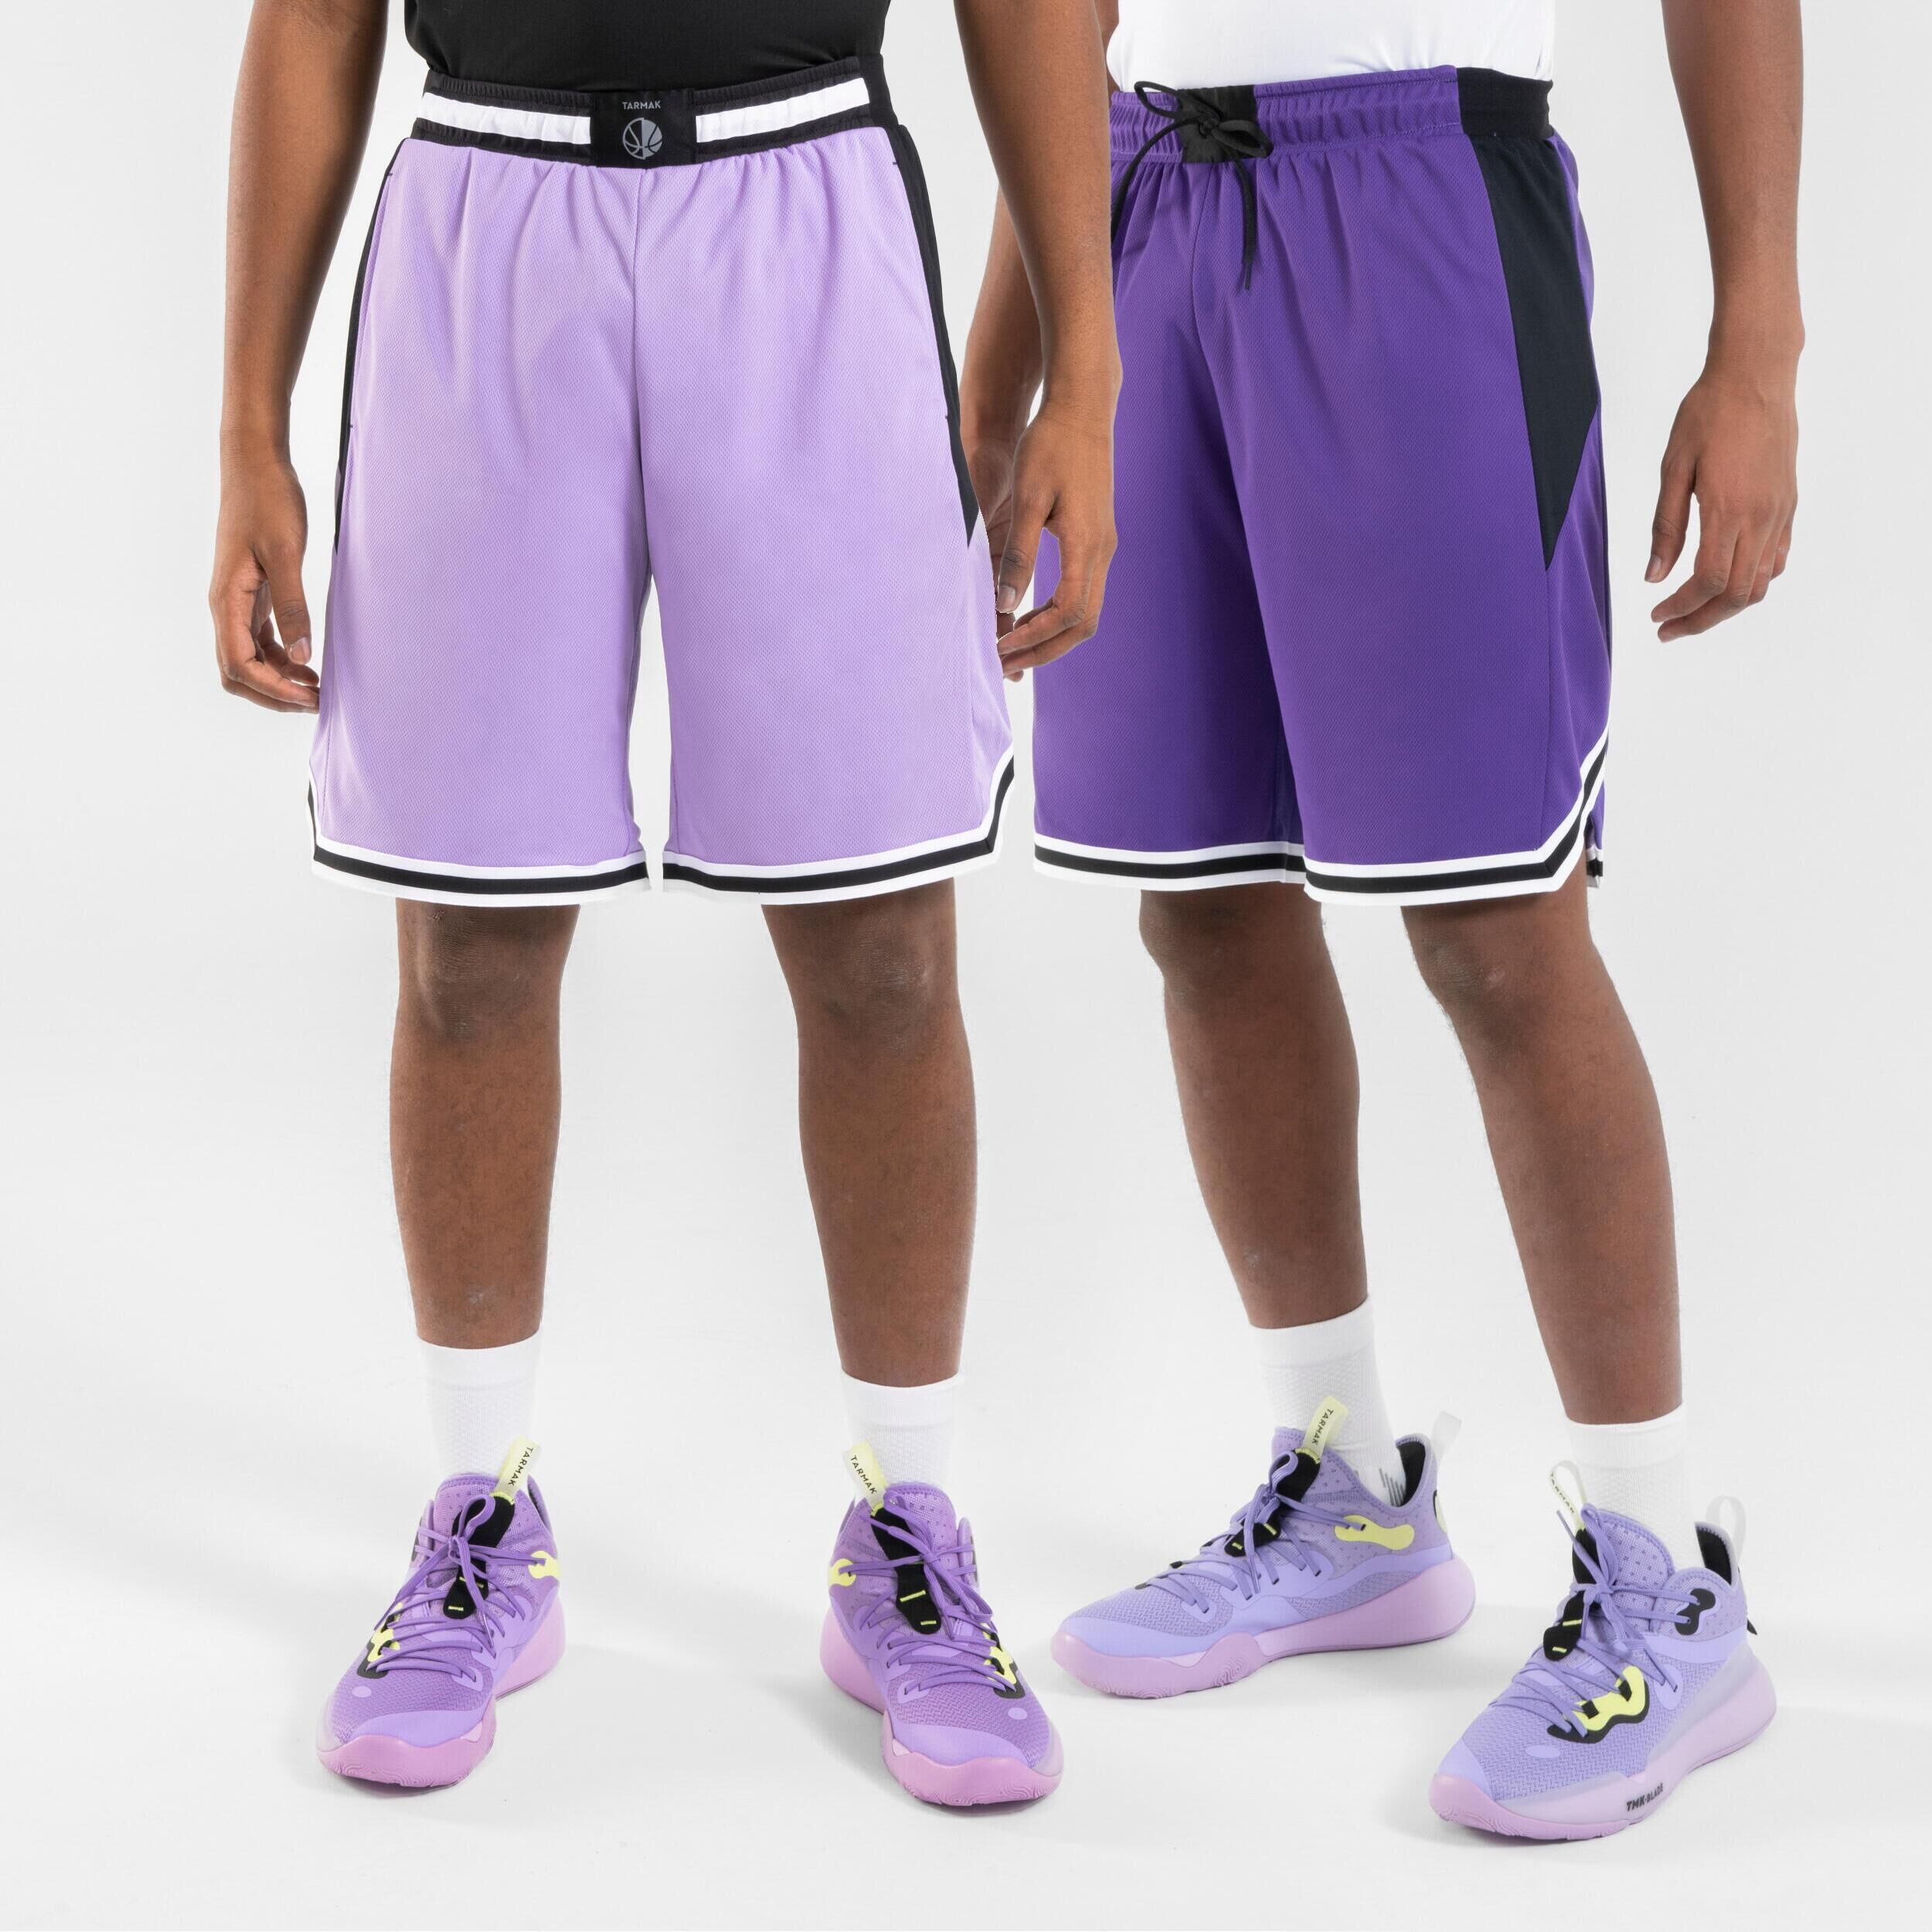 TARMAK Men's/Women's Reversible Basketball Shorts SH500R - Purple/Lilac